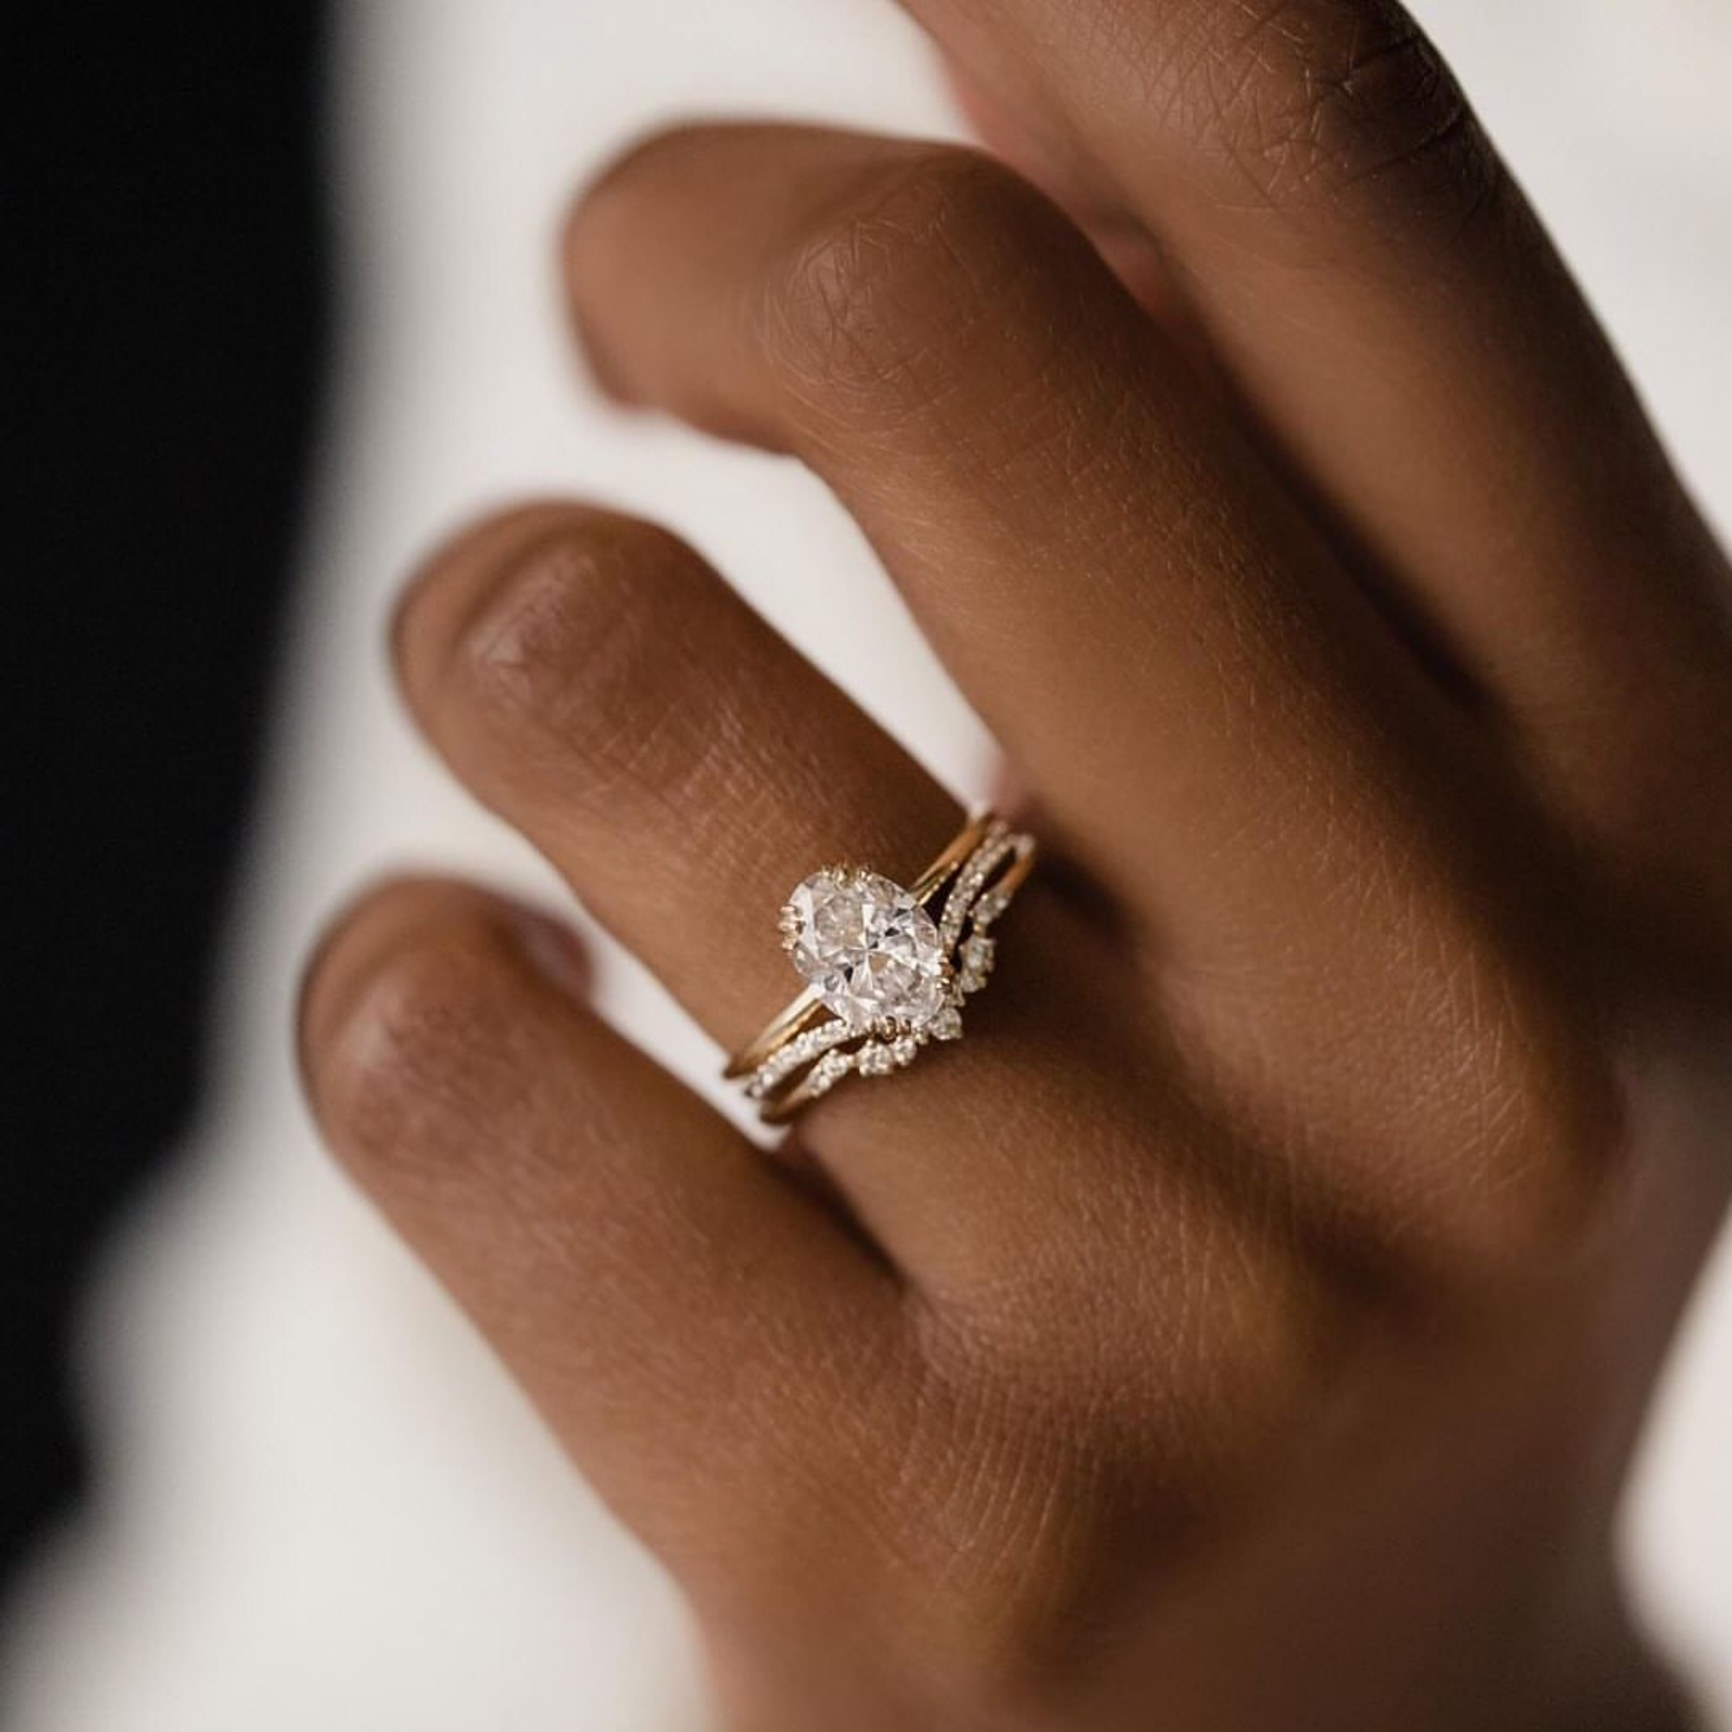 A bride shows off a big diamond ring